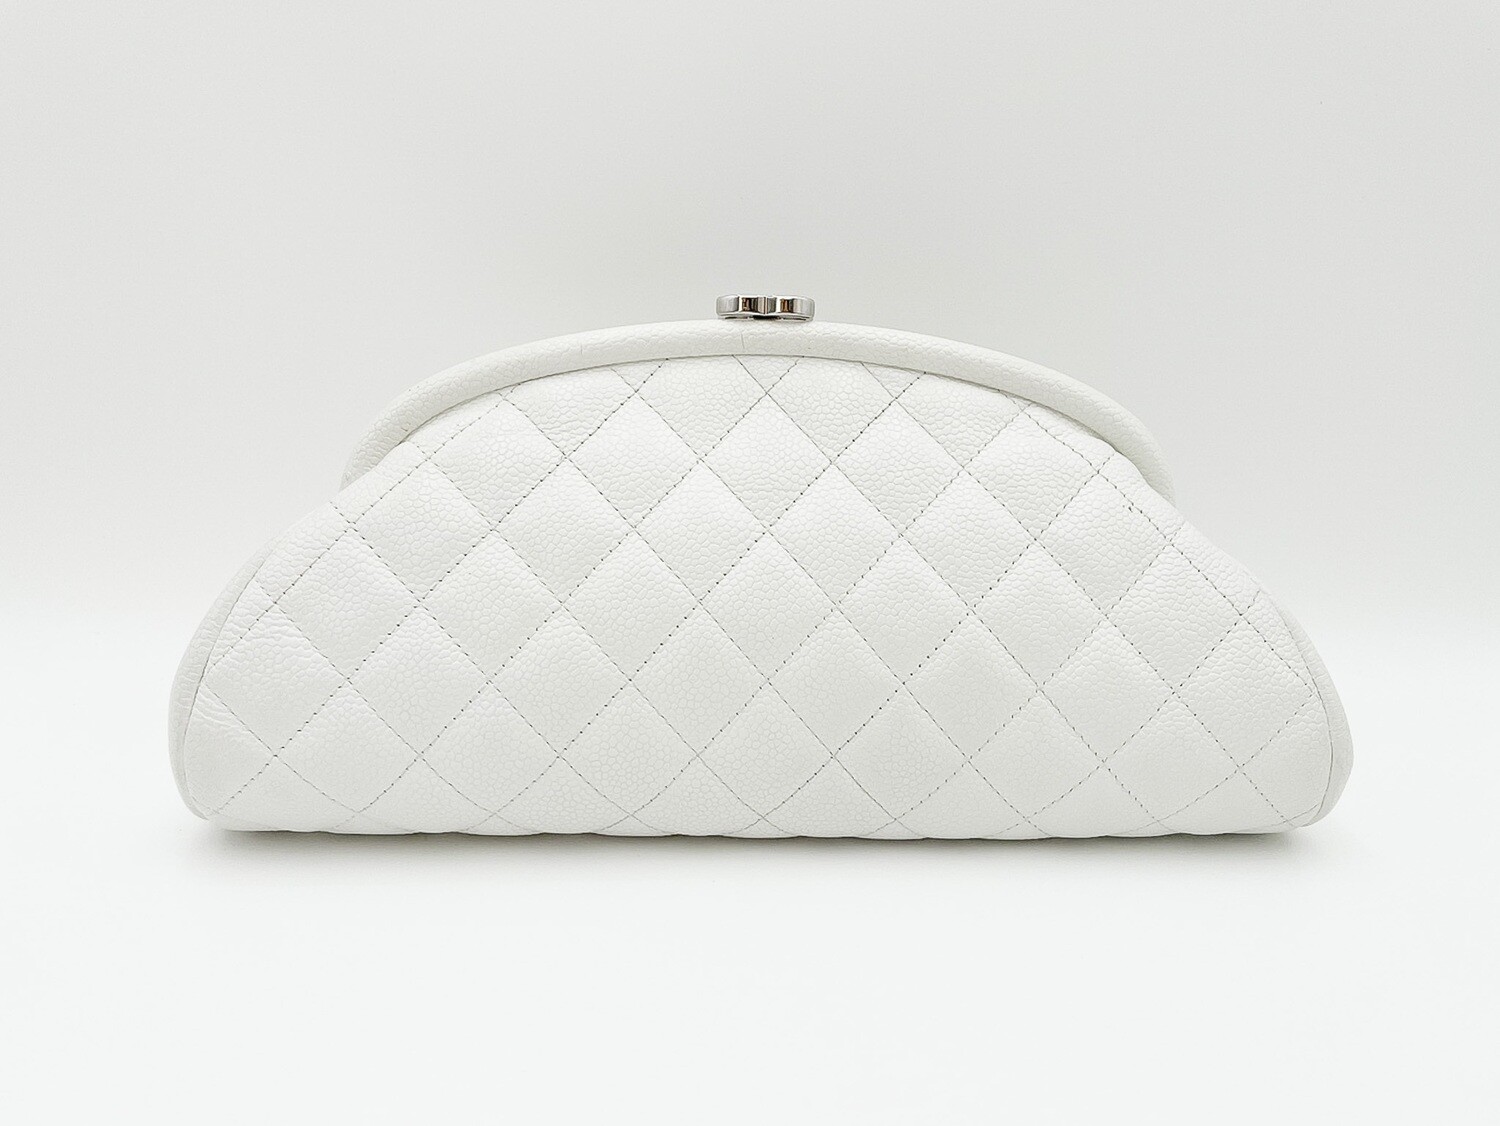 Chanel Classic Jumbo Double Flap, Sakura Pink Caviar Leather, Silver  Hardware, Preowned in Box - Julia Rose Boston